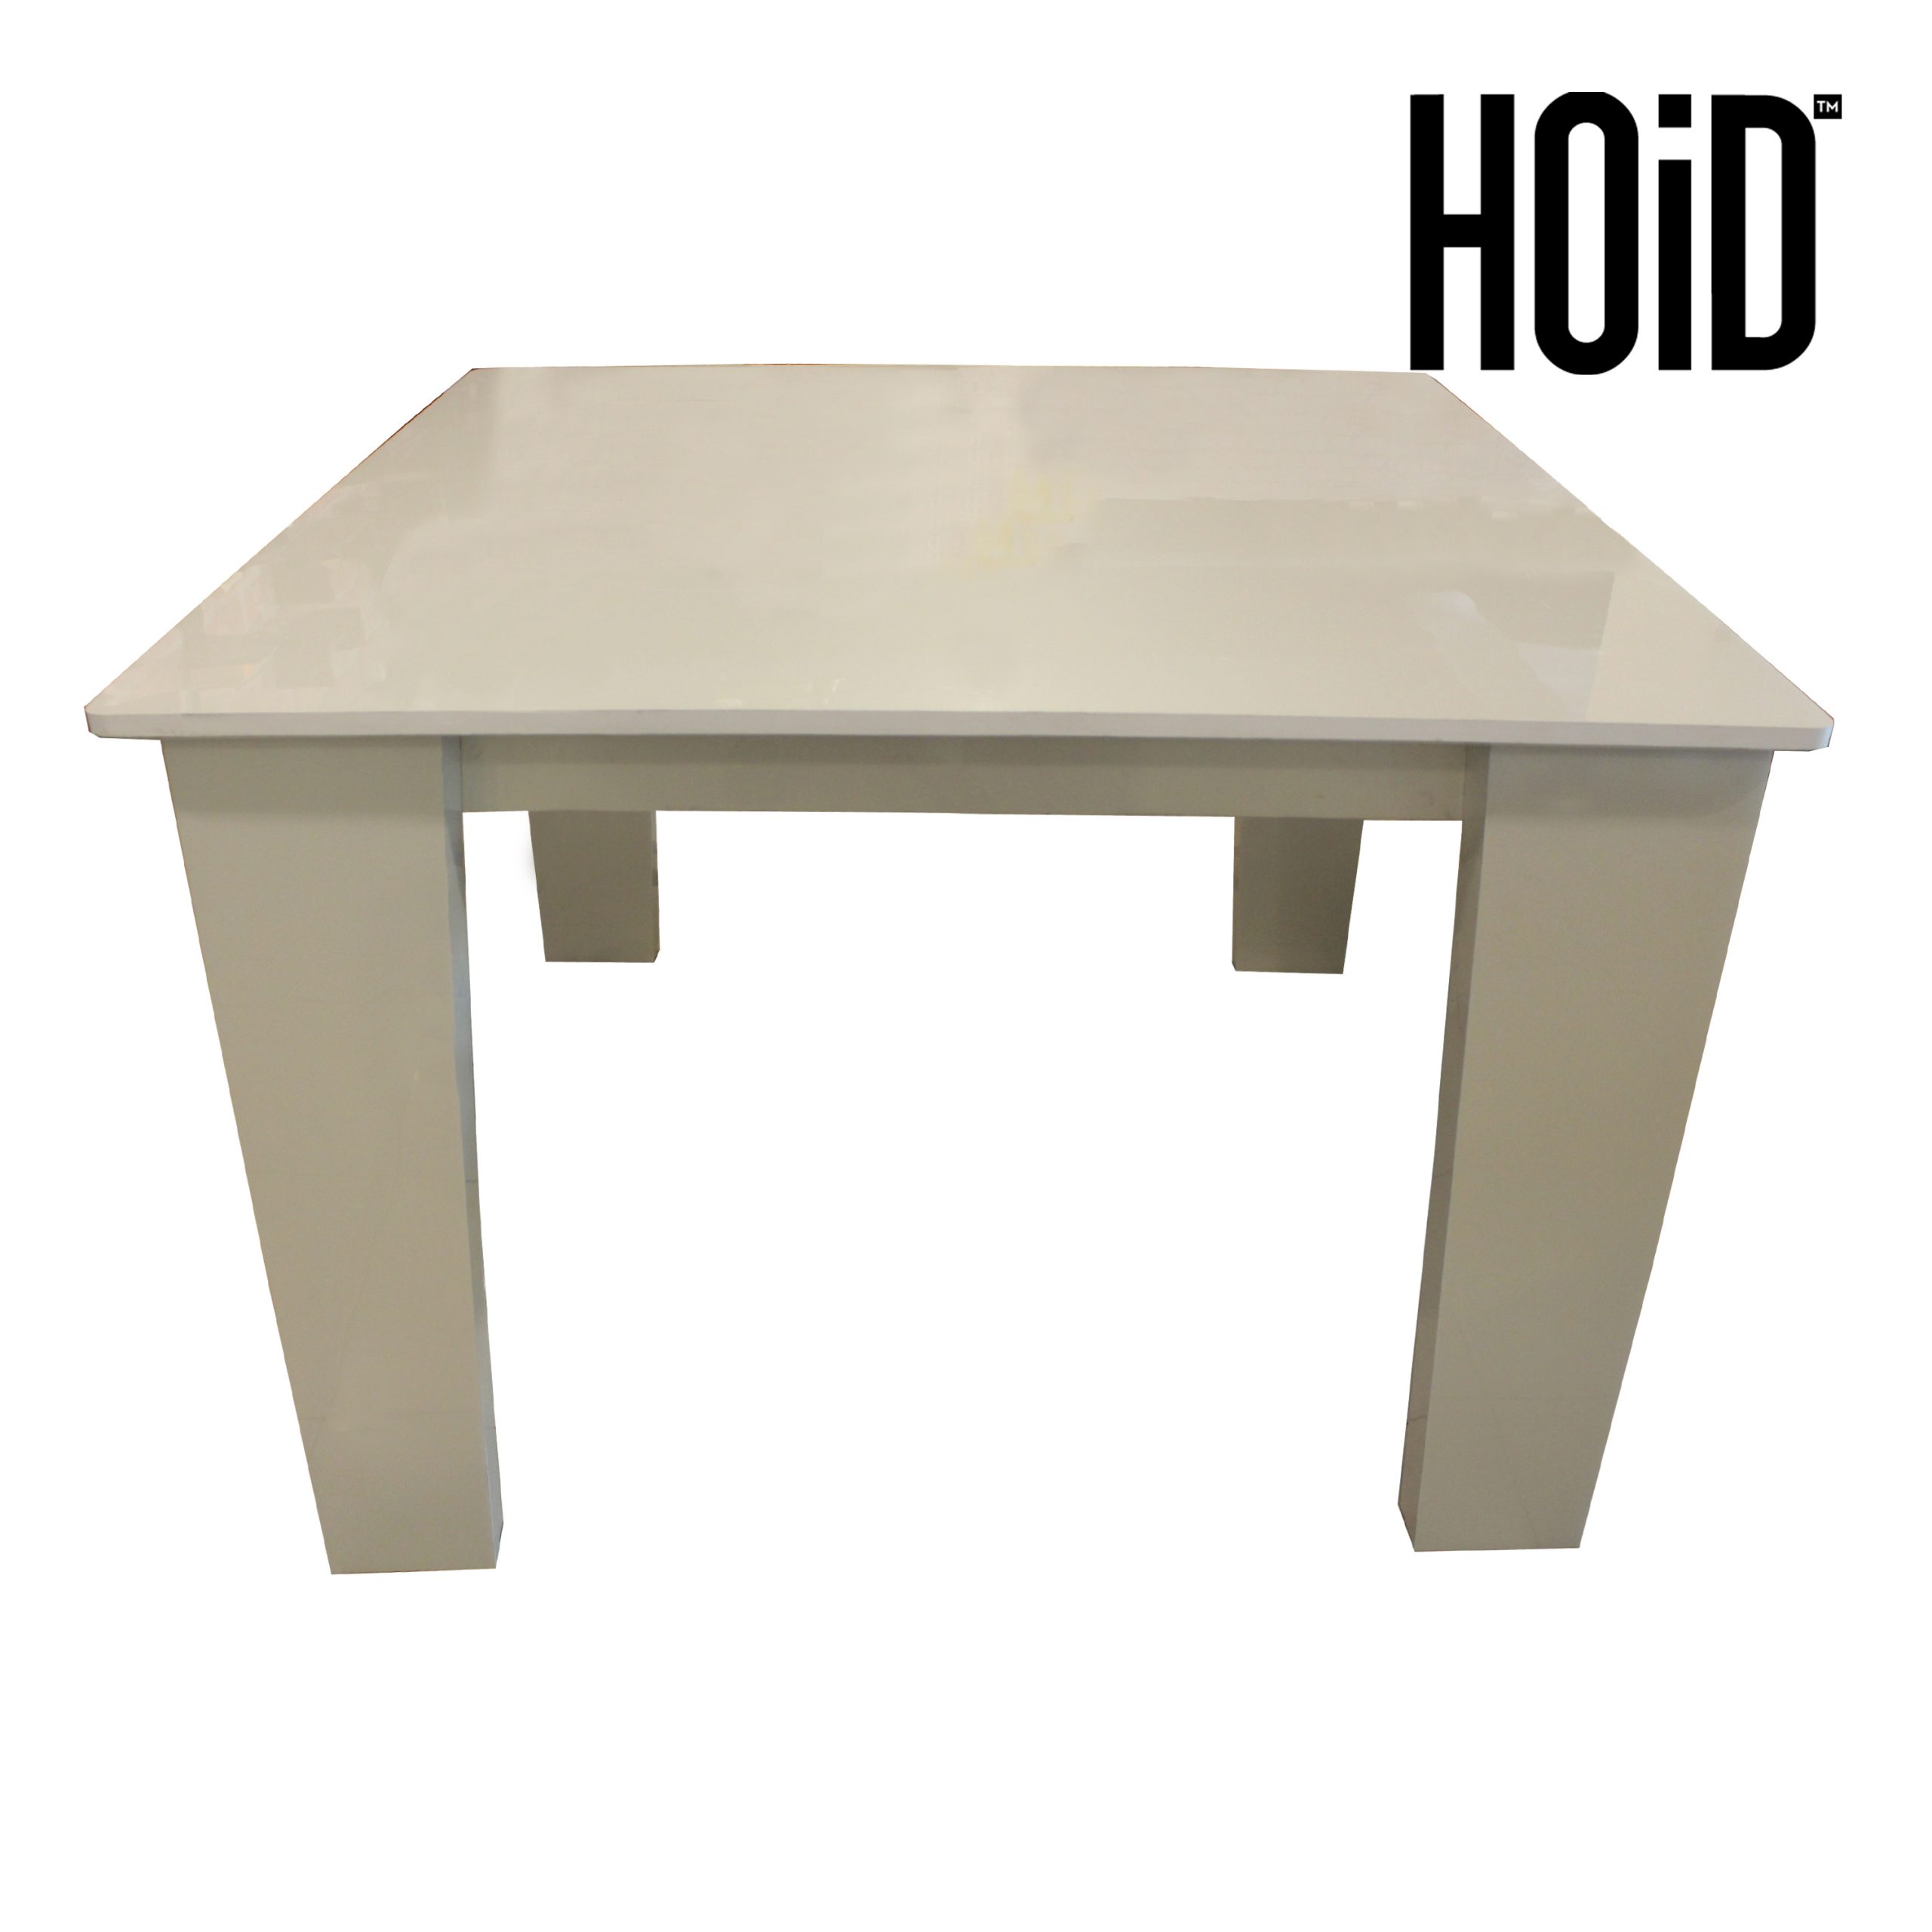 pearl-acrylic-office-table-scaled-2.jpg